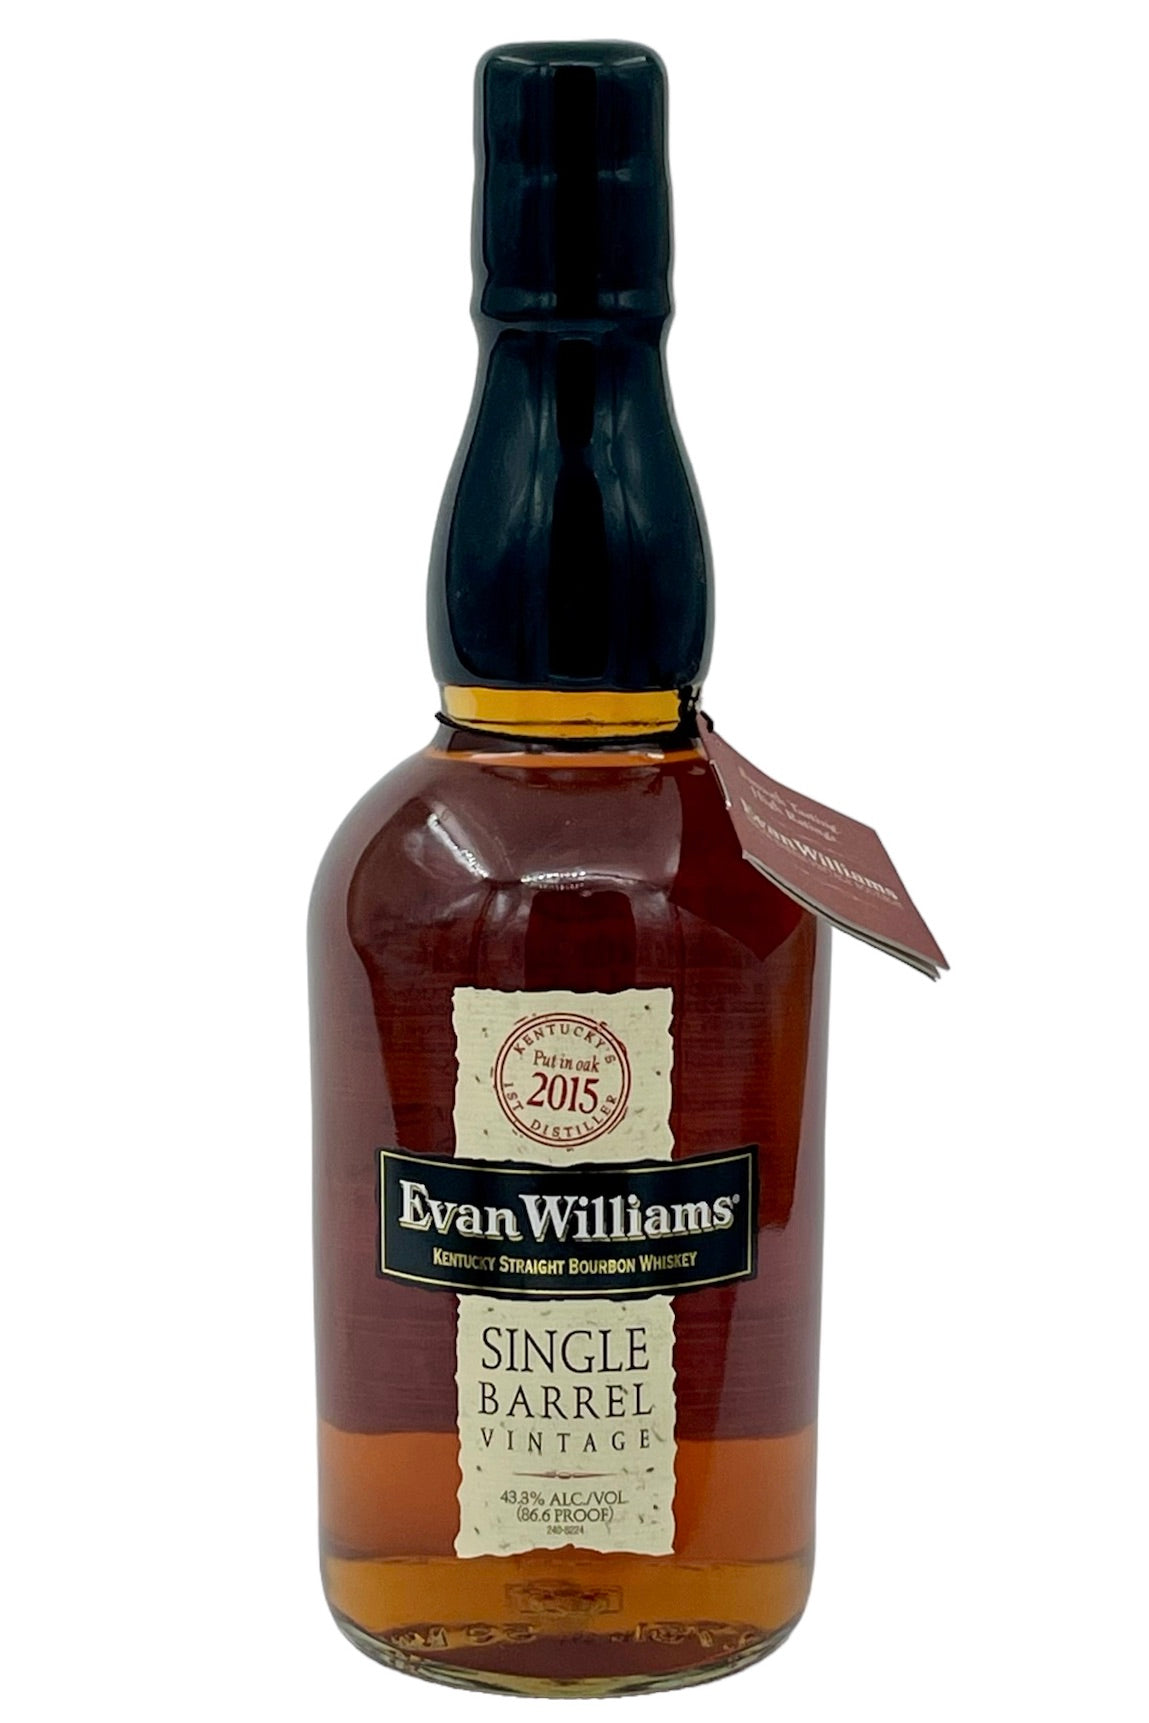 Evan Williams Vintage 2015 Single Barrel Bourbon Whiskey